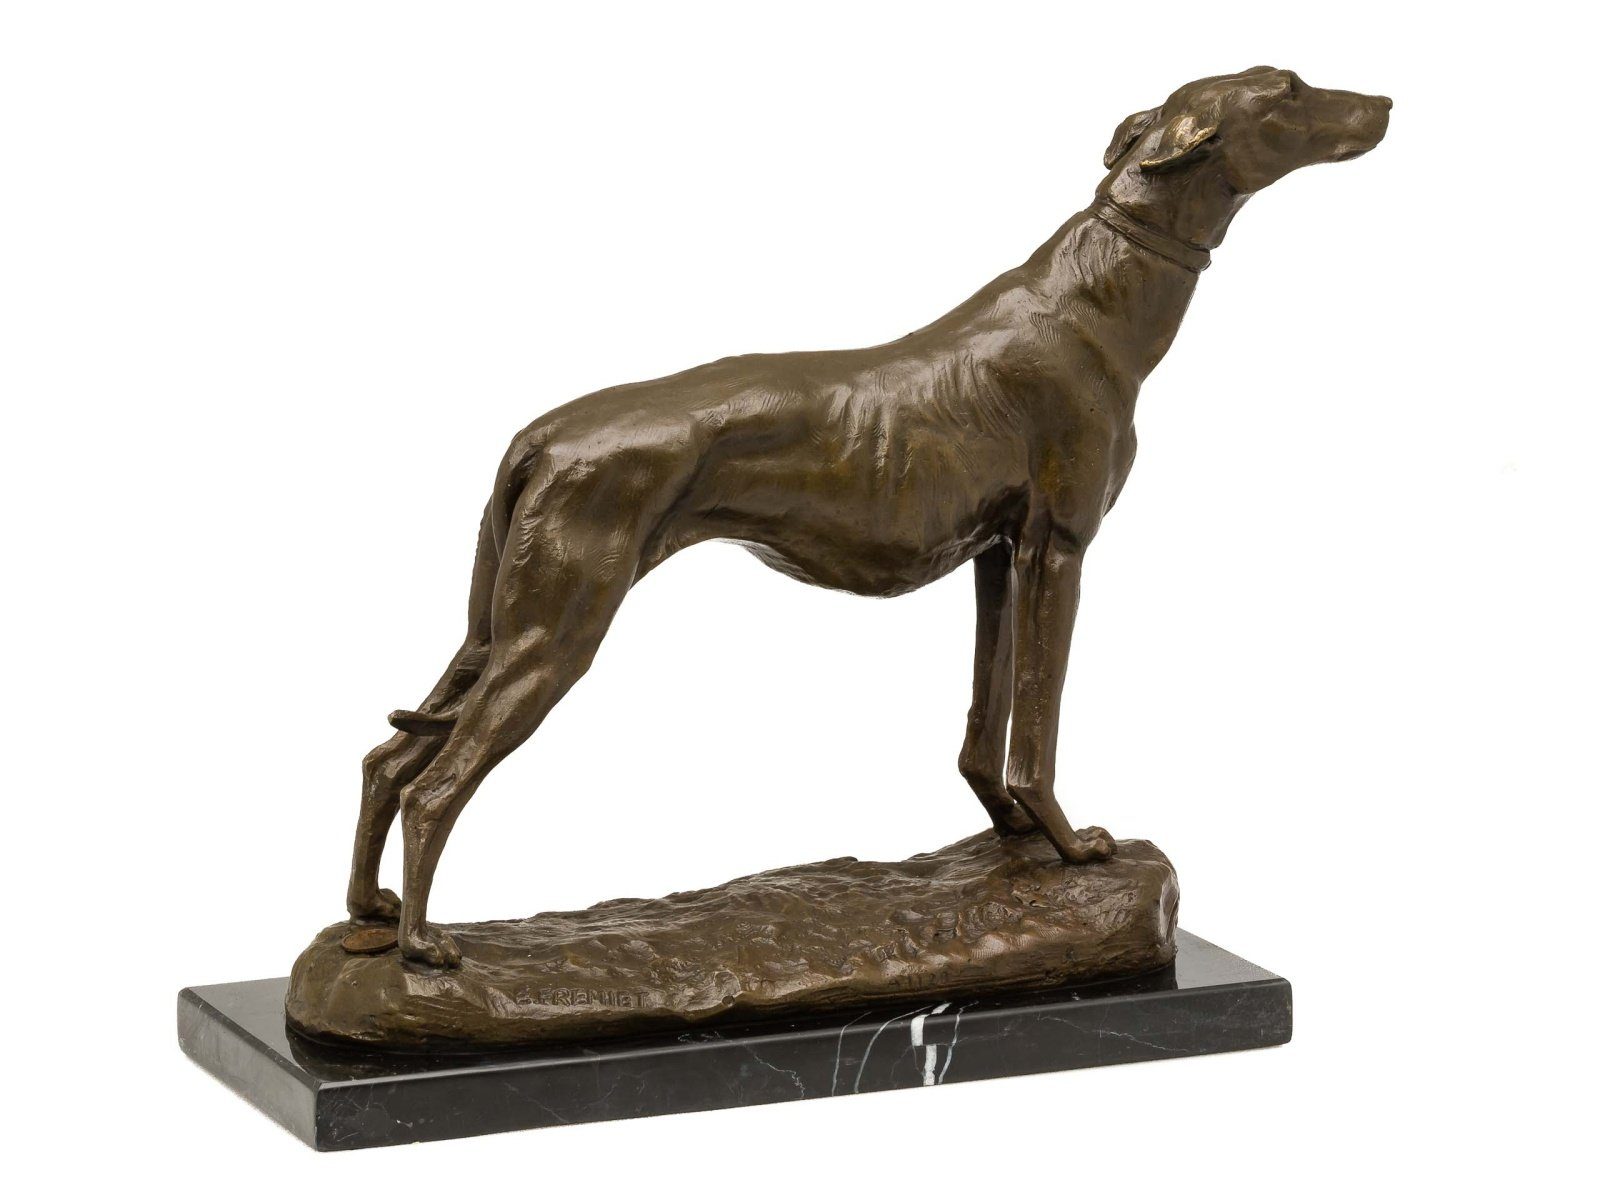 Aubaho Skulptur Bronzeskulptur Hund nach Emmanuel Repl Figur Windhund Skulptur Fremiet